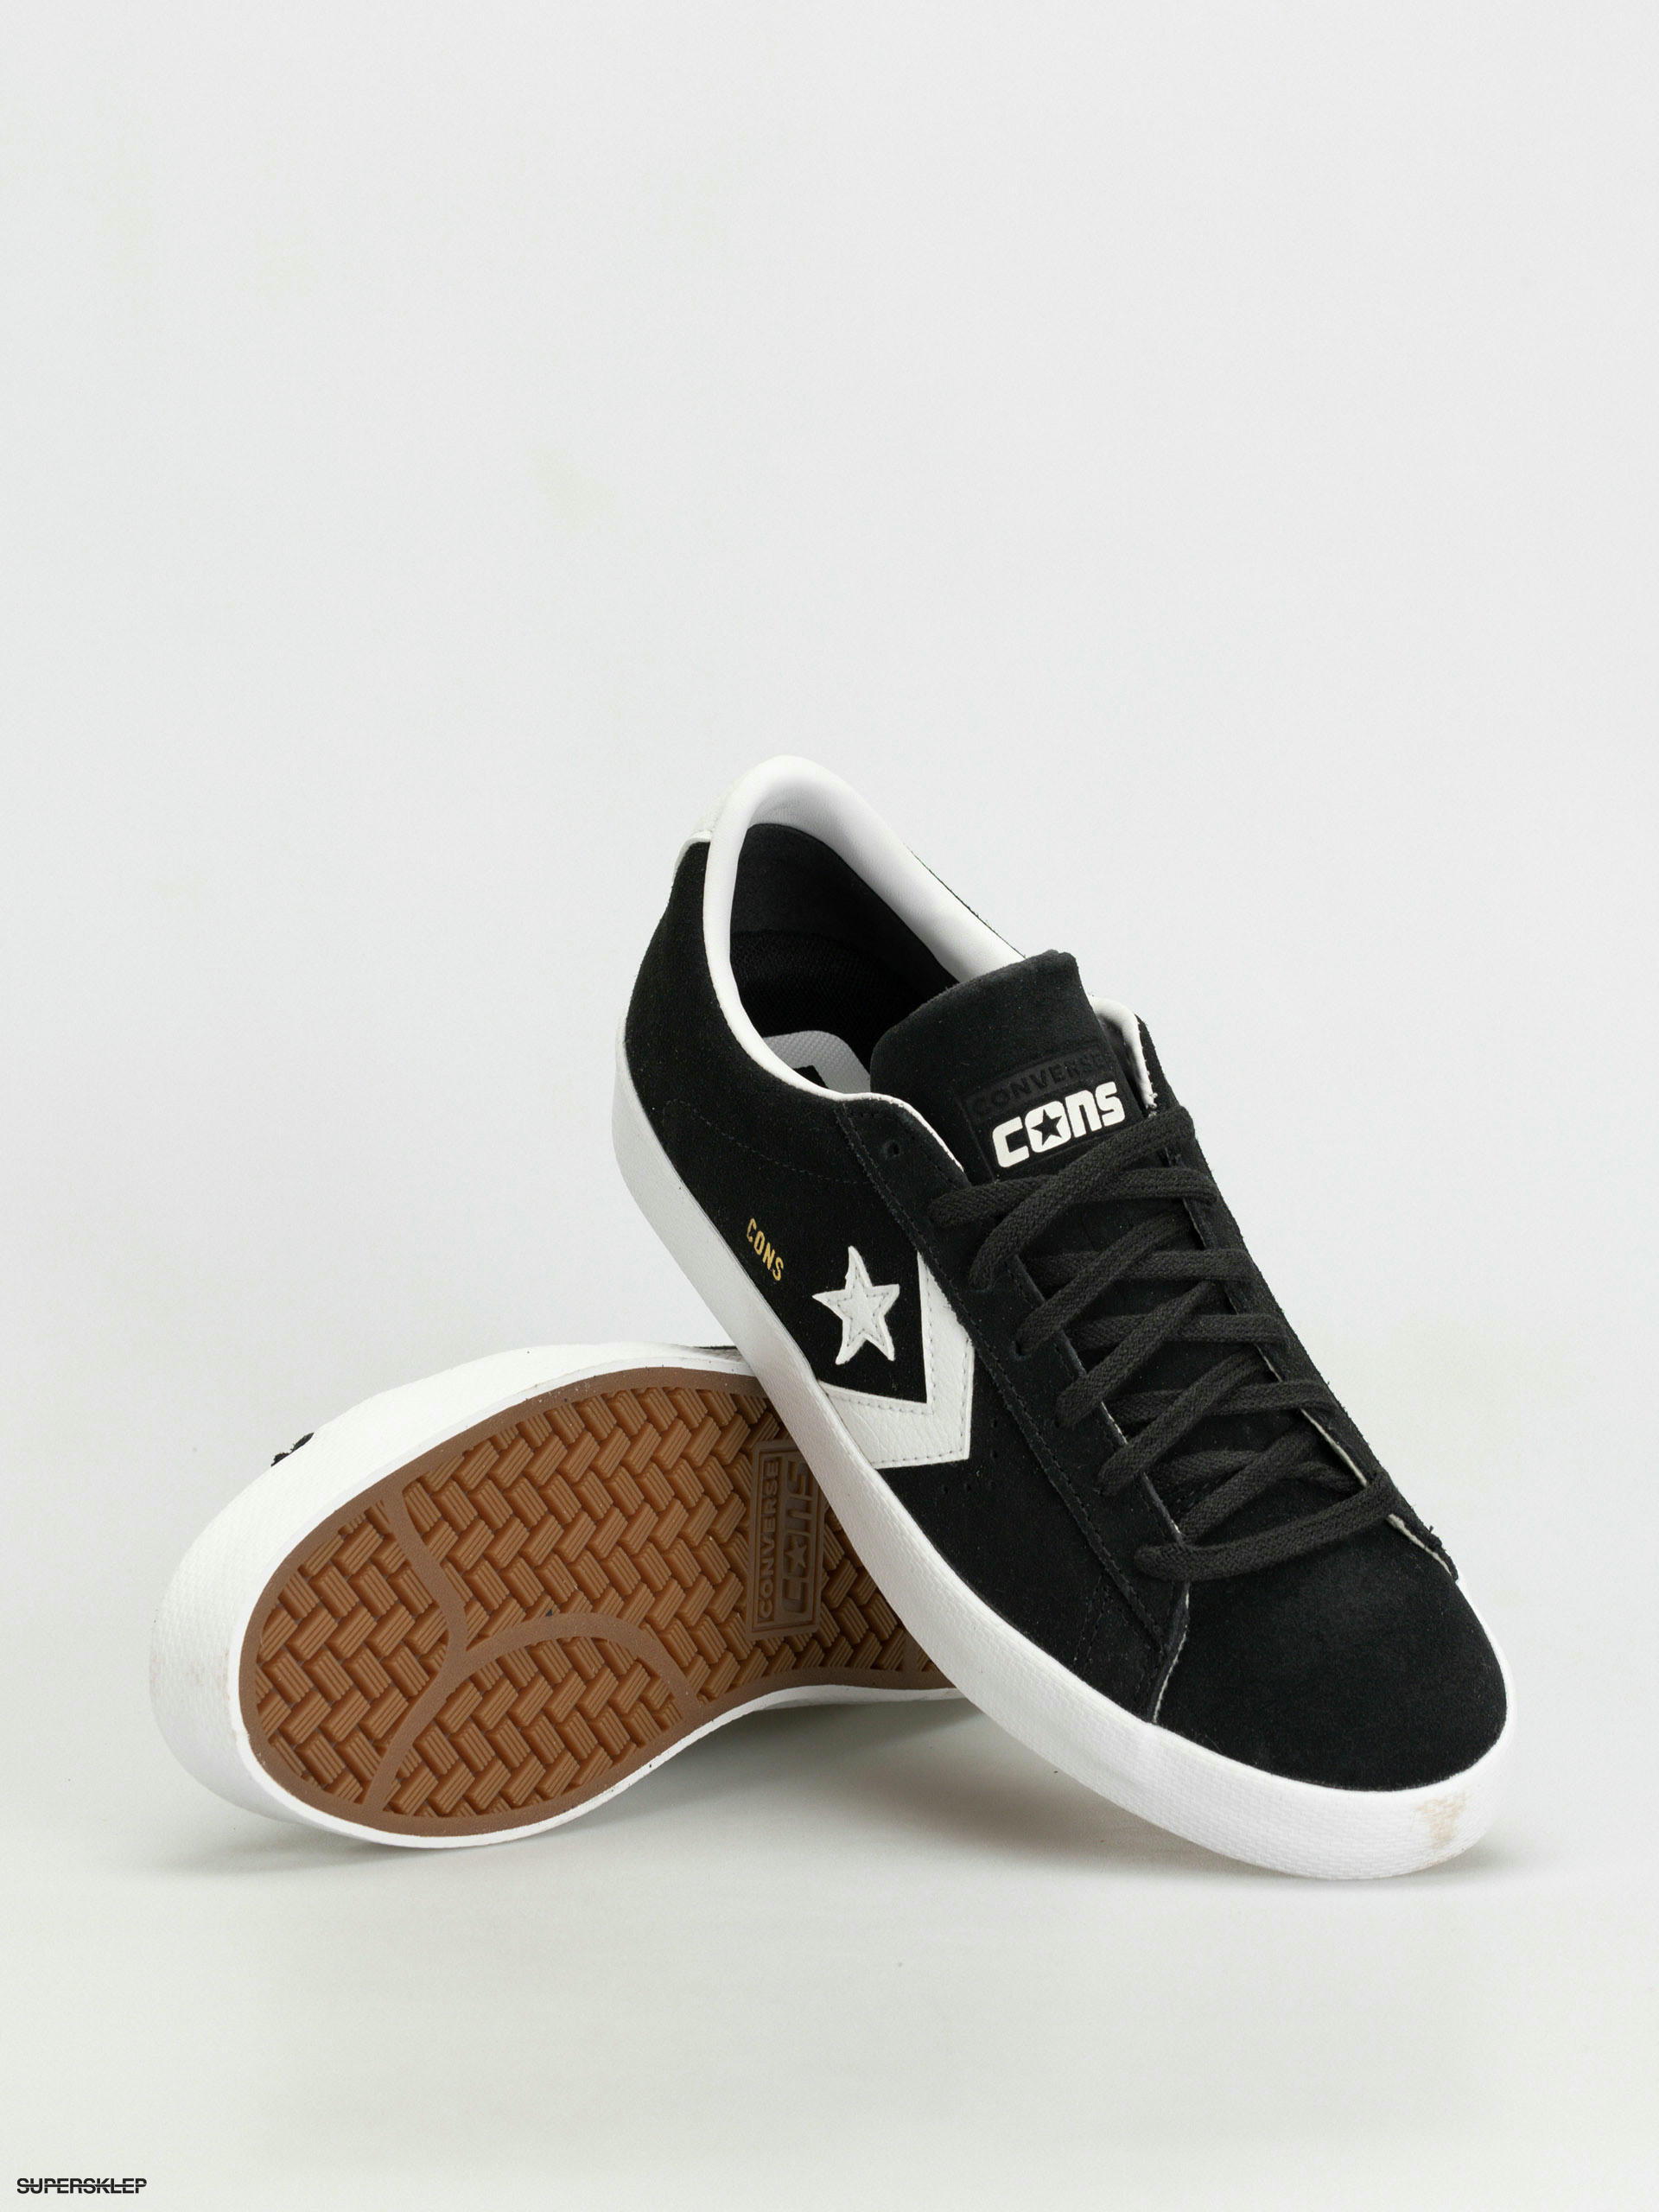 Converse Pro Leather Vulc (black/white)